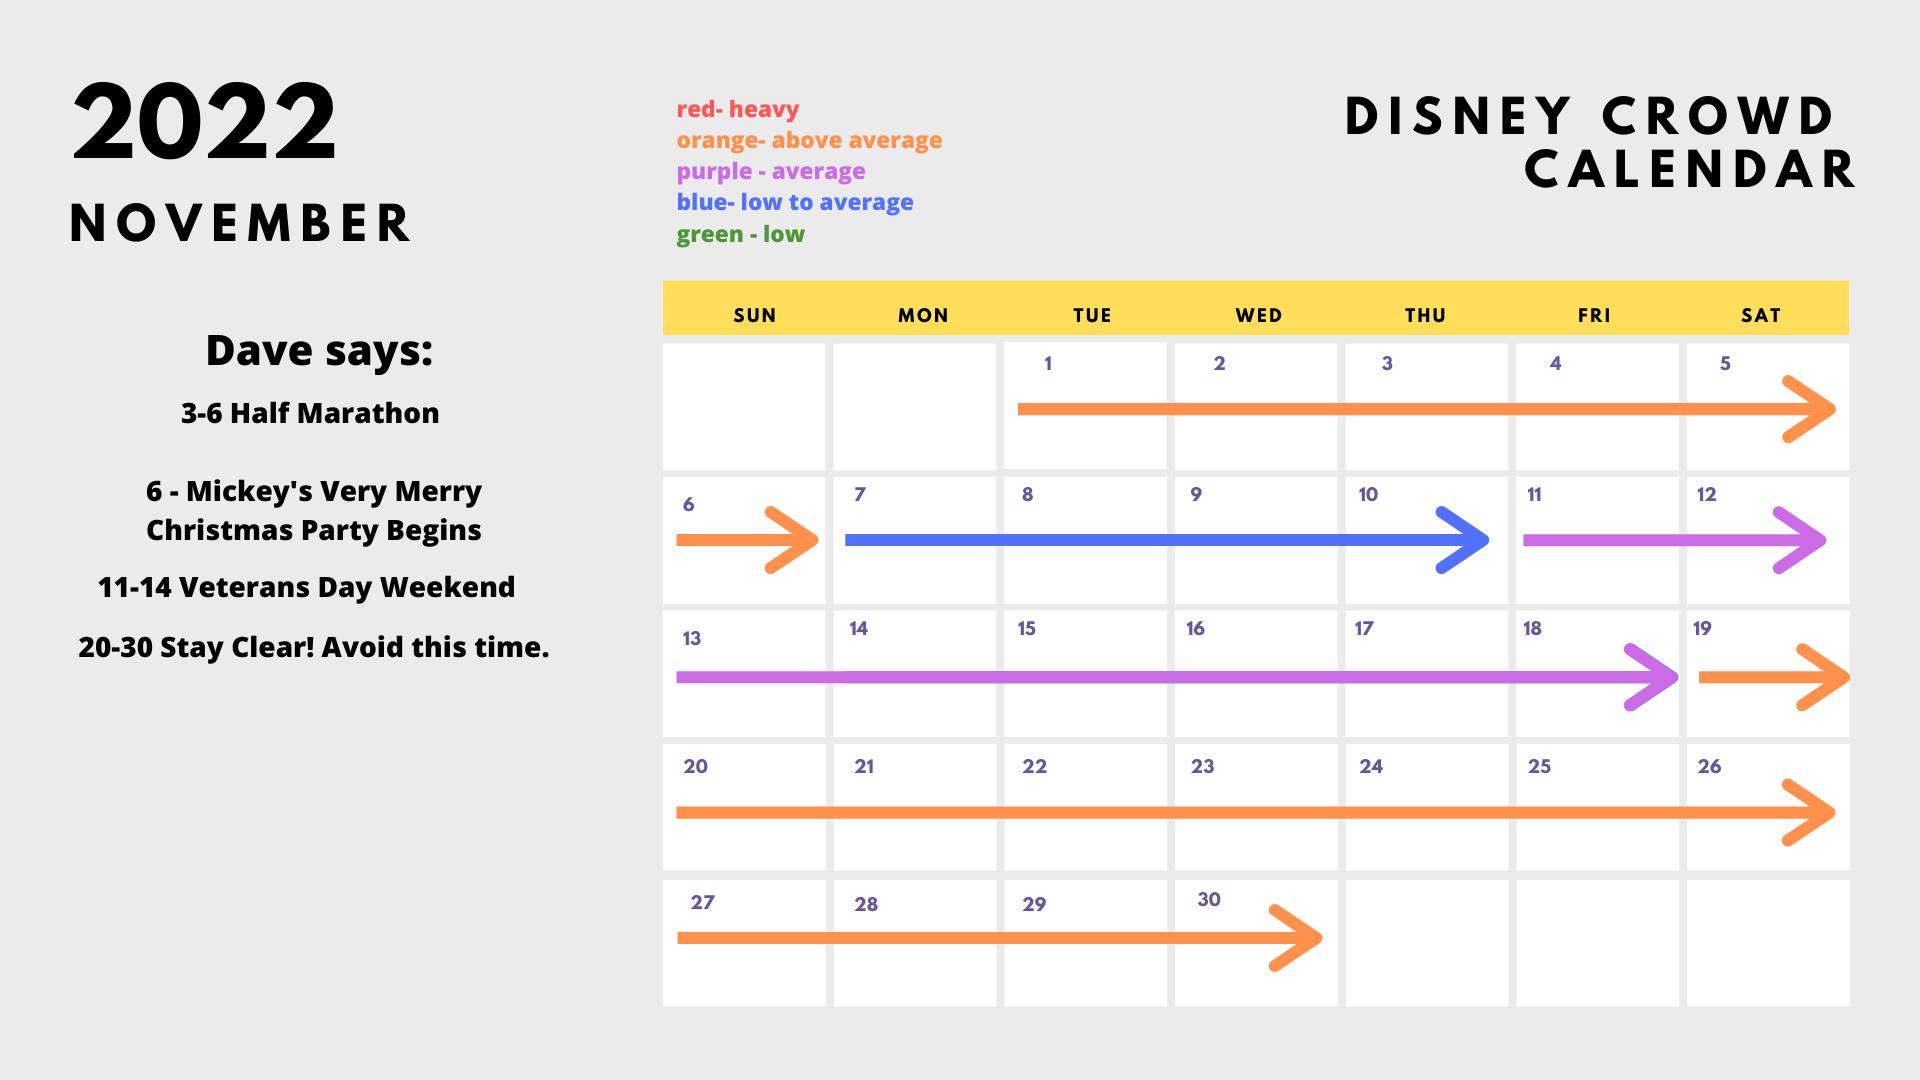 November Disney crowd calendar